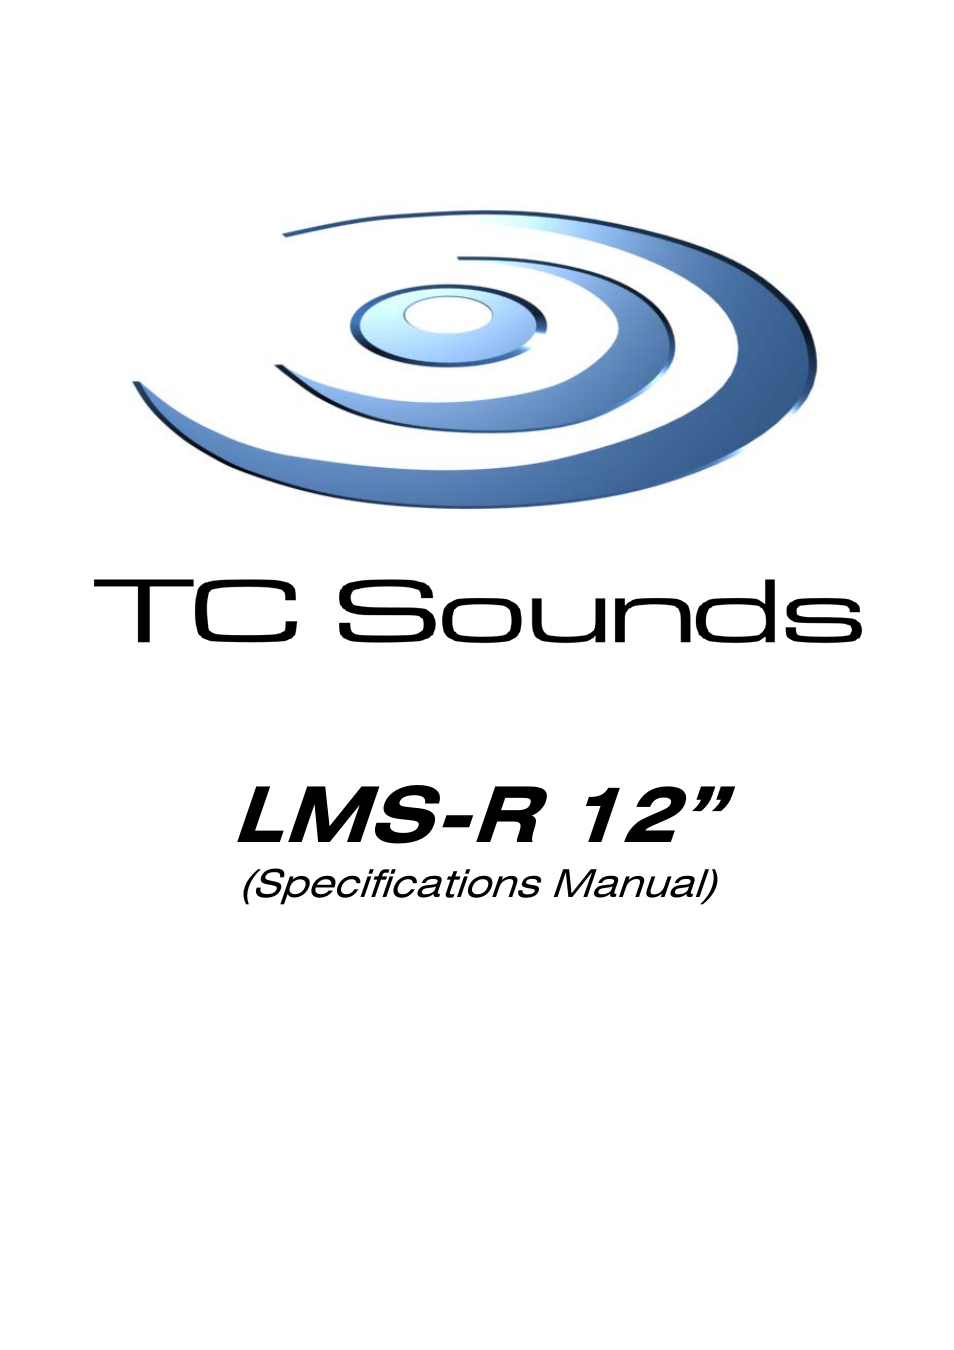 TC Sounds LMS-R 12 User Manual | 4 pages